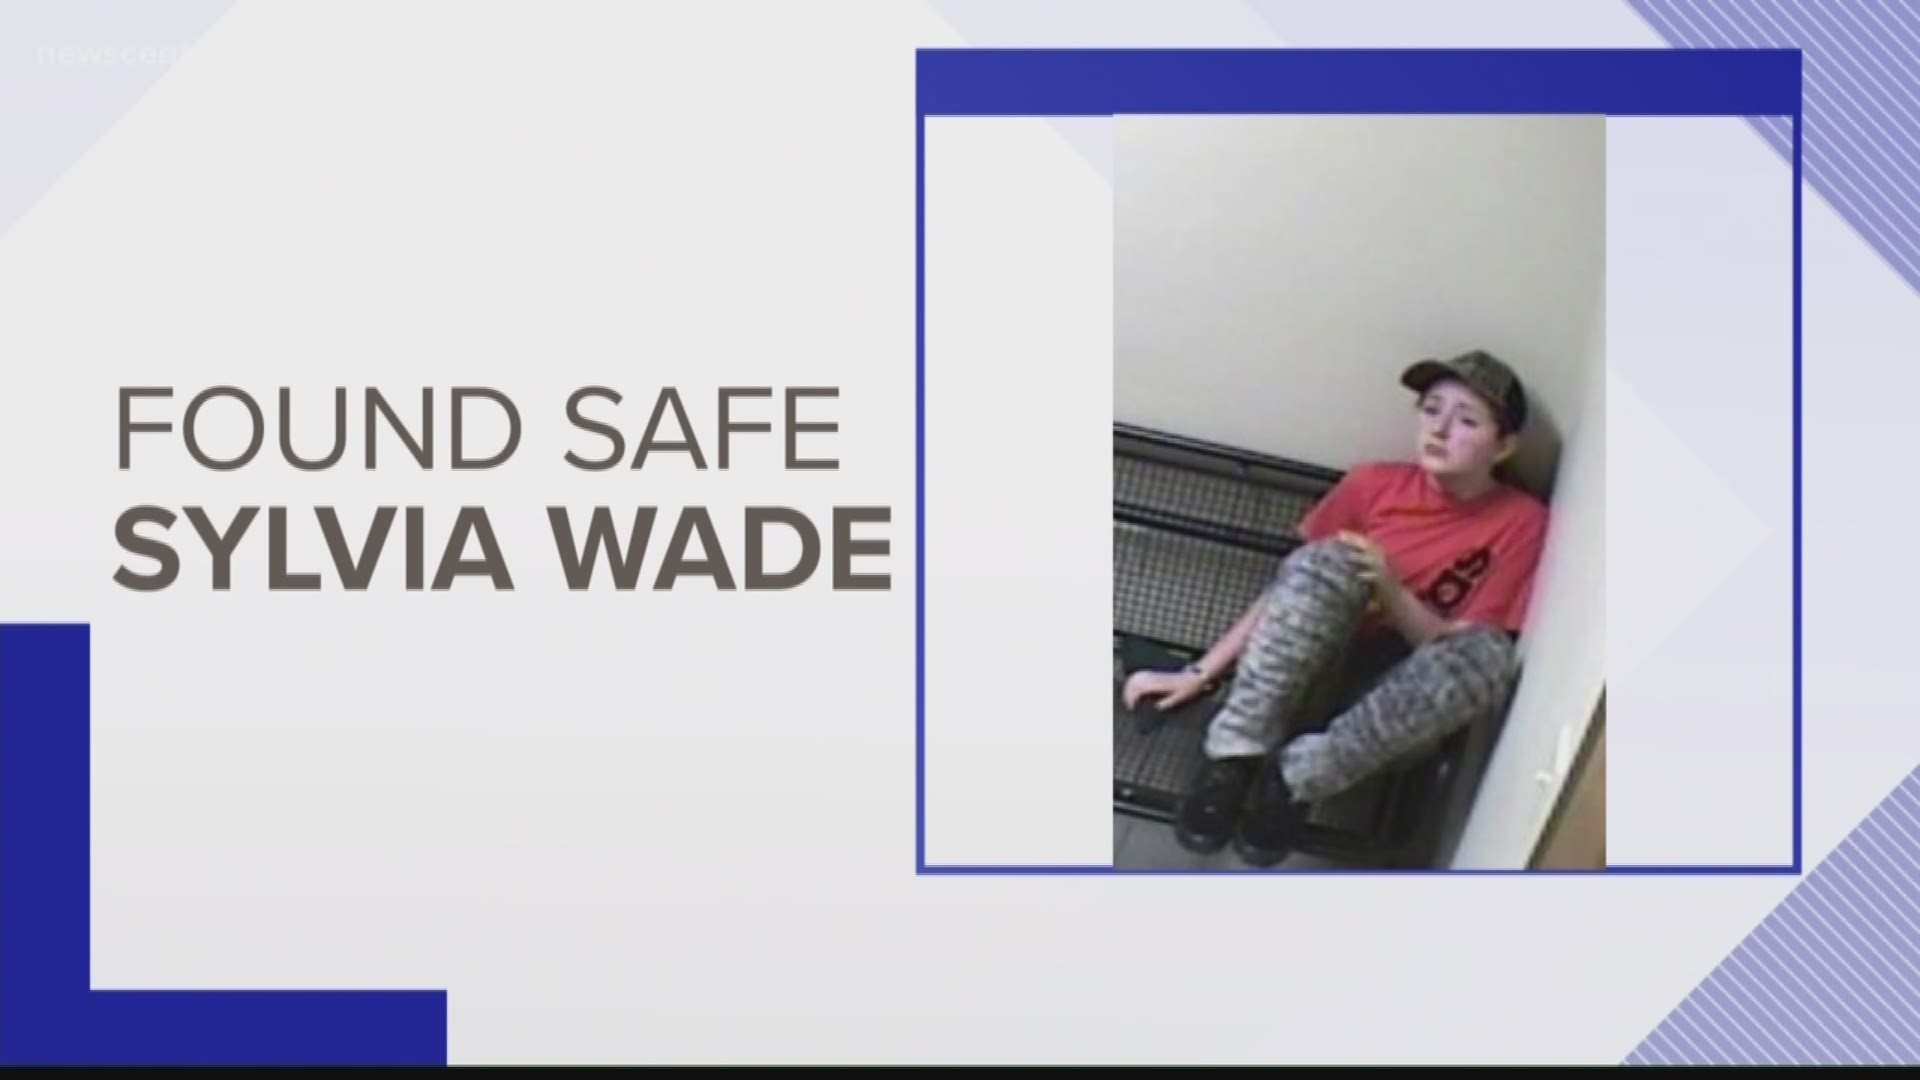 Sylvia Wade, 11, of Bangor was found safe around 6:45 p.m. on Tuesday.